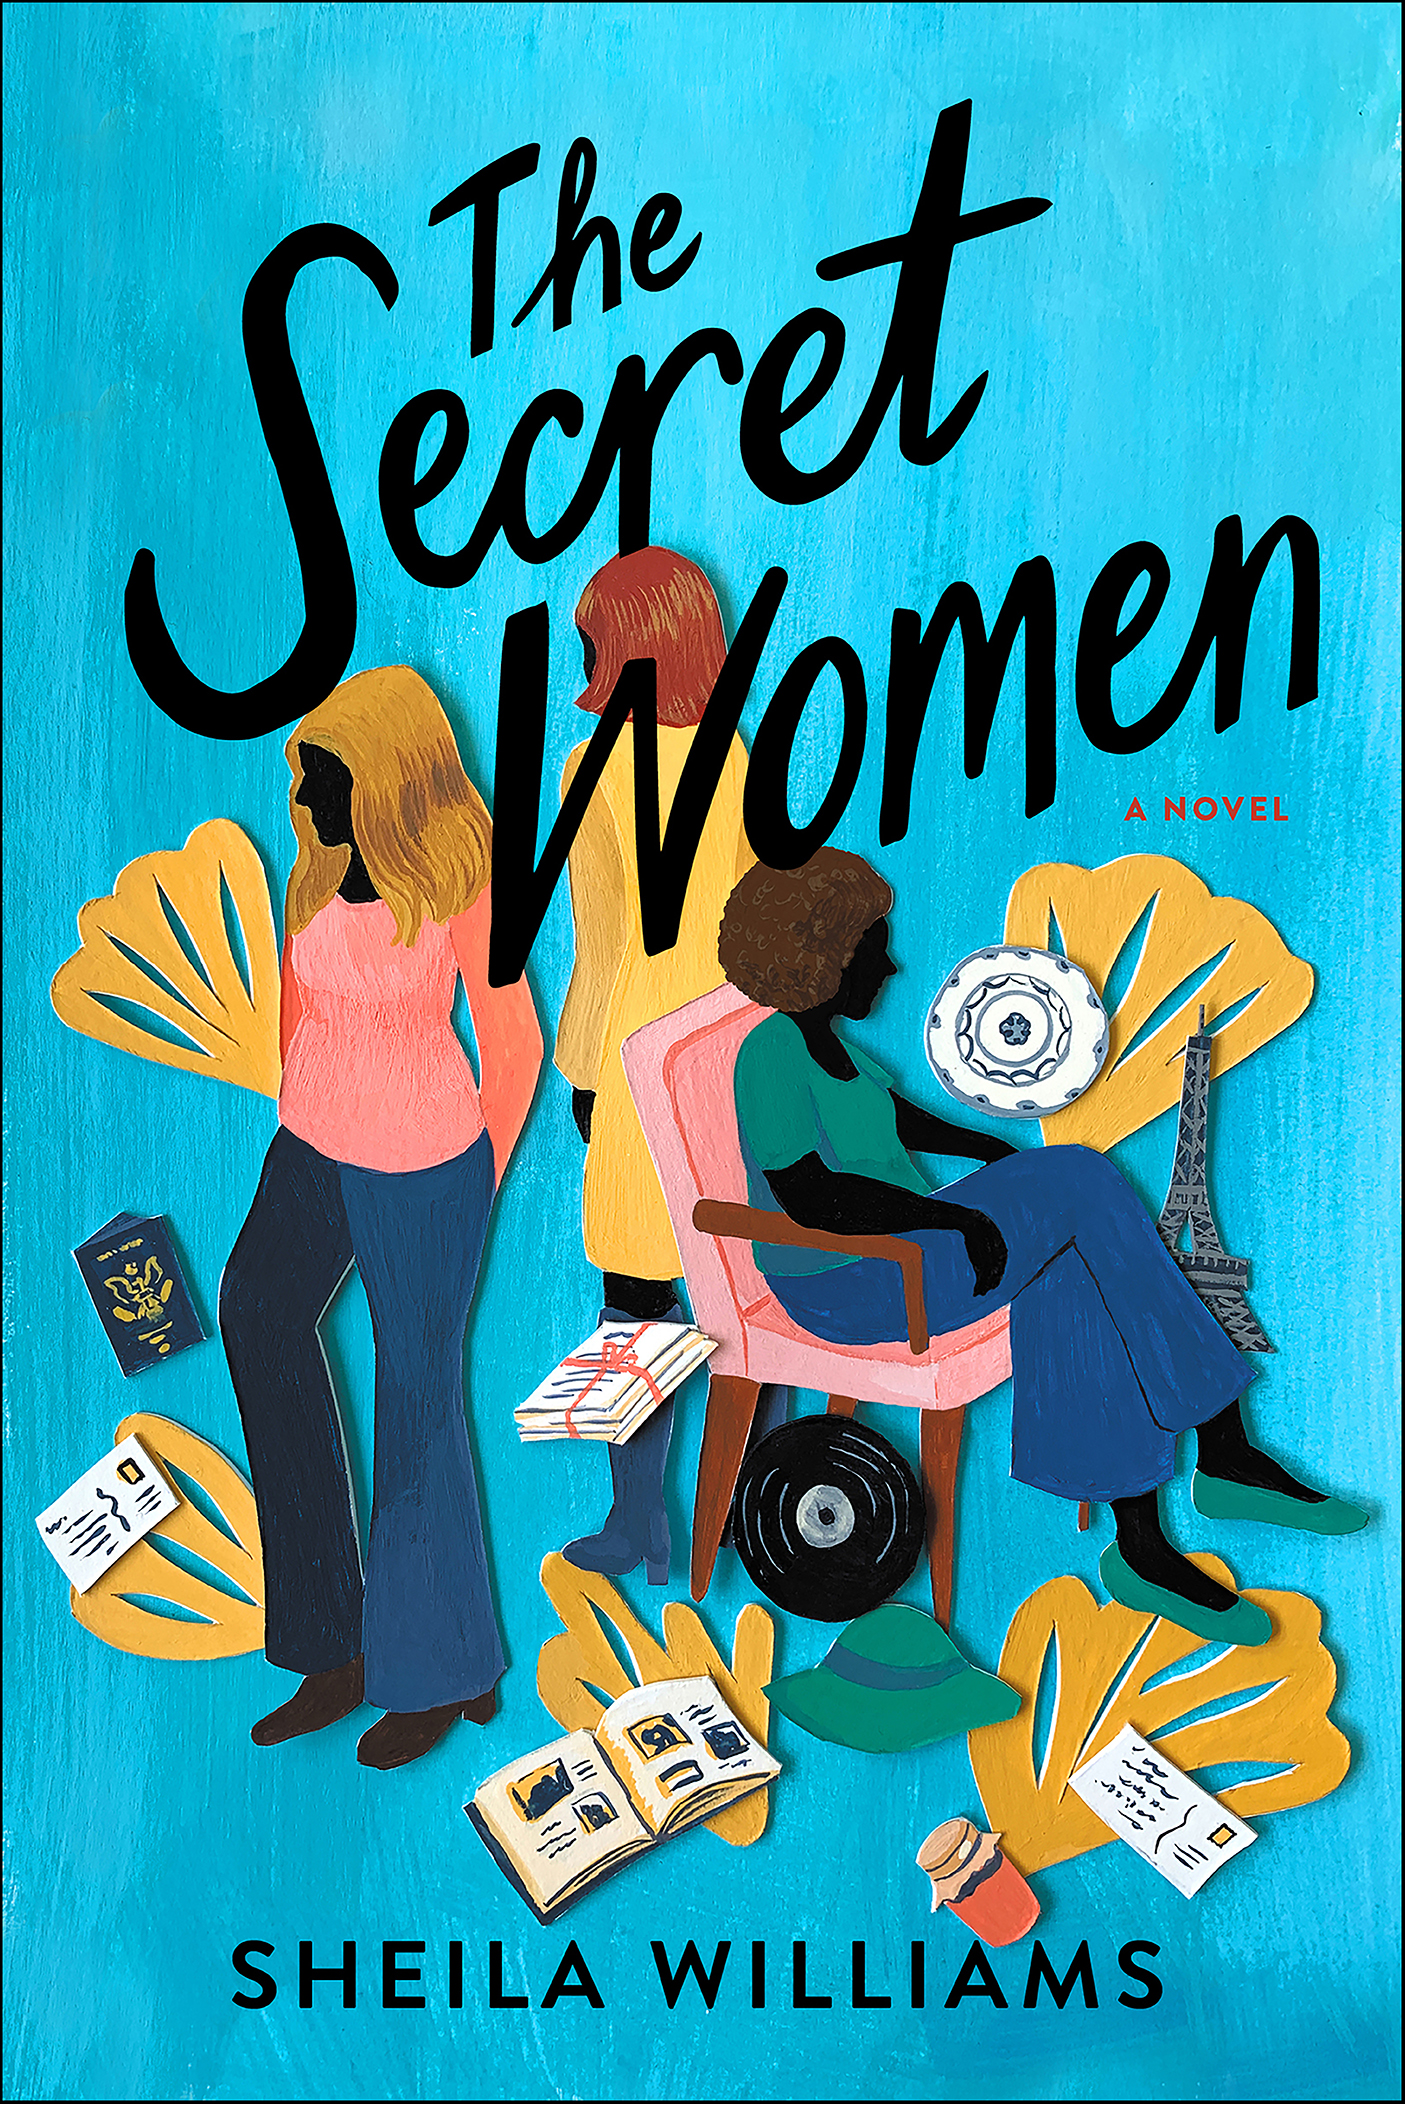 The secret women cover image